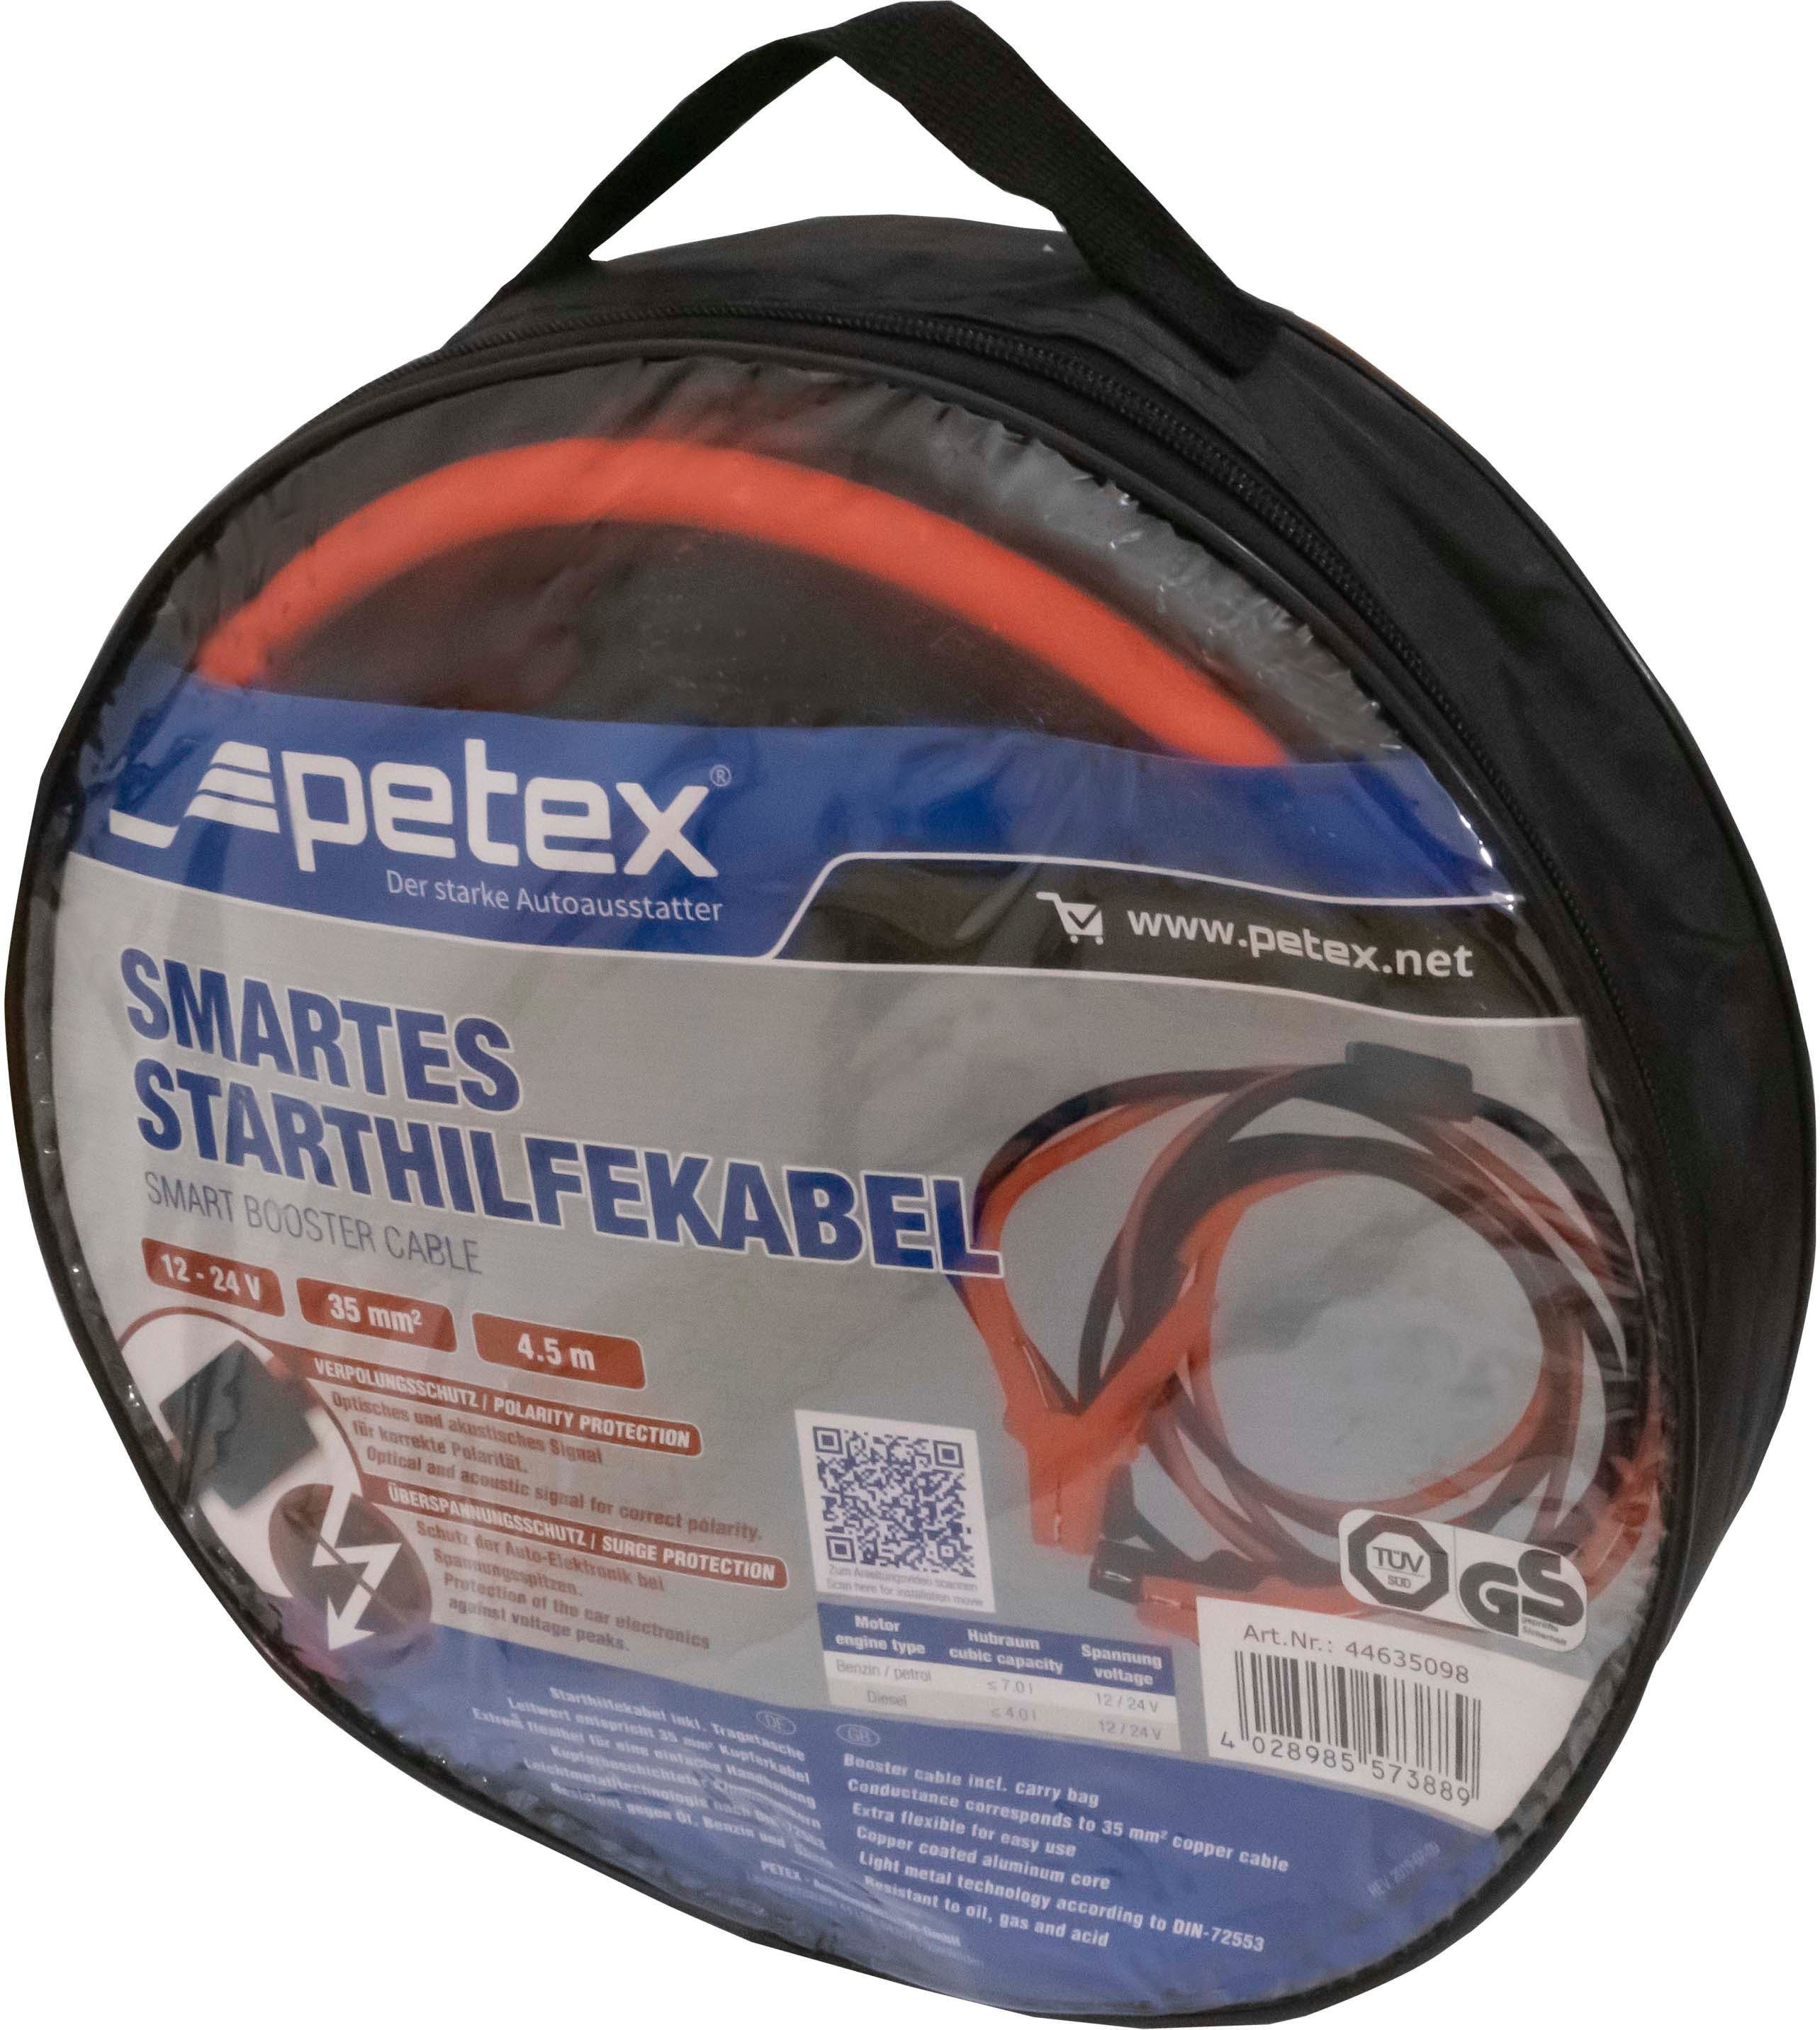 Petex PKW Starthilfekabel Überbrückungskabel 35 mm² 4,5m